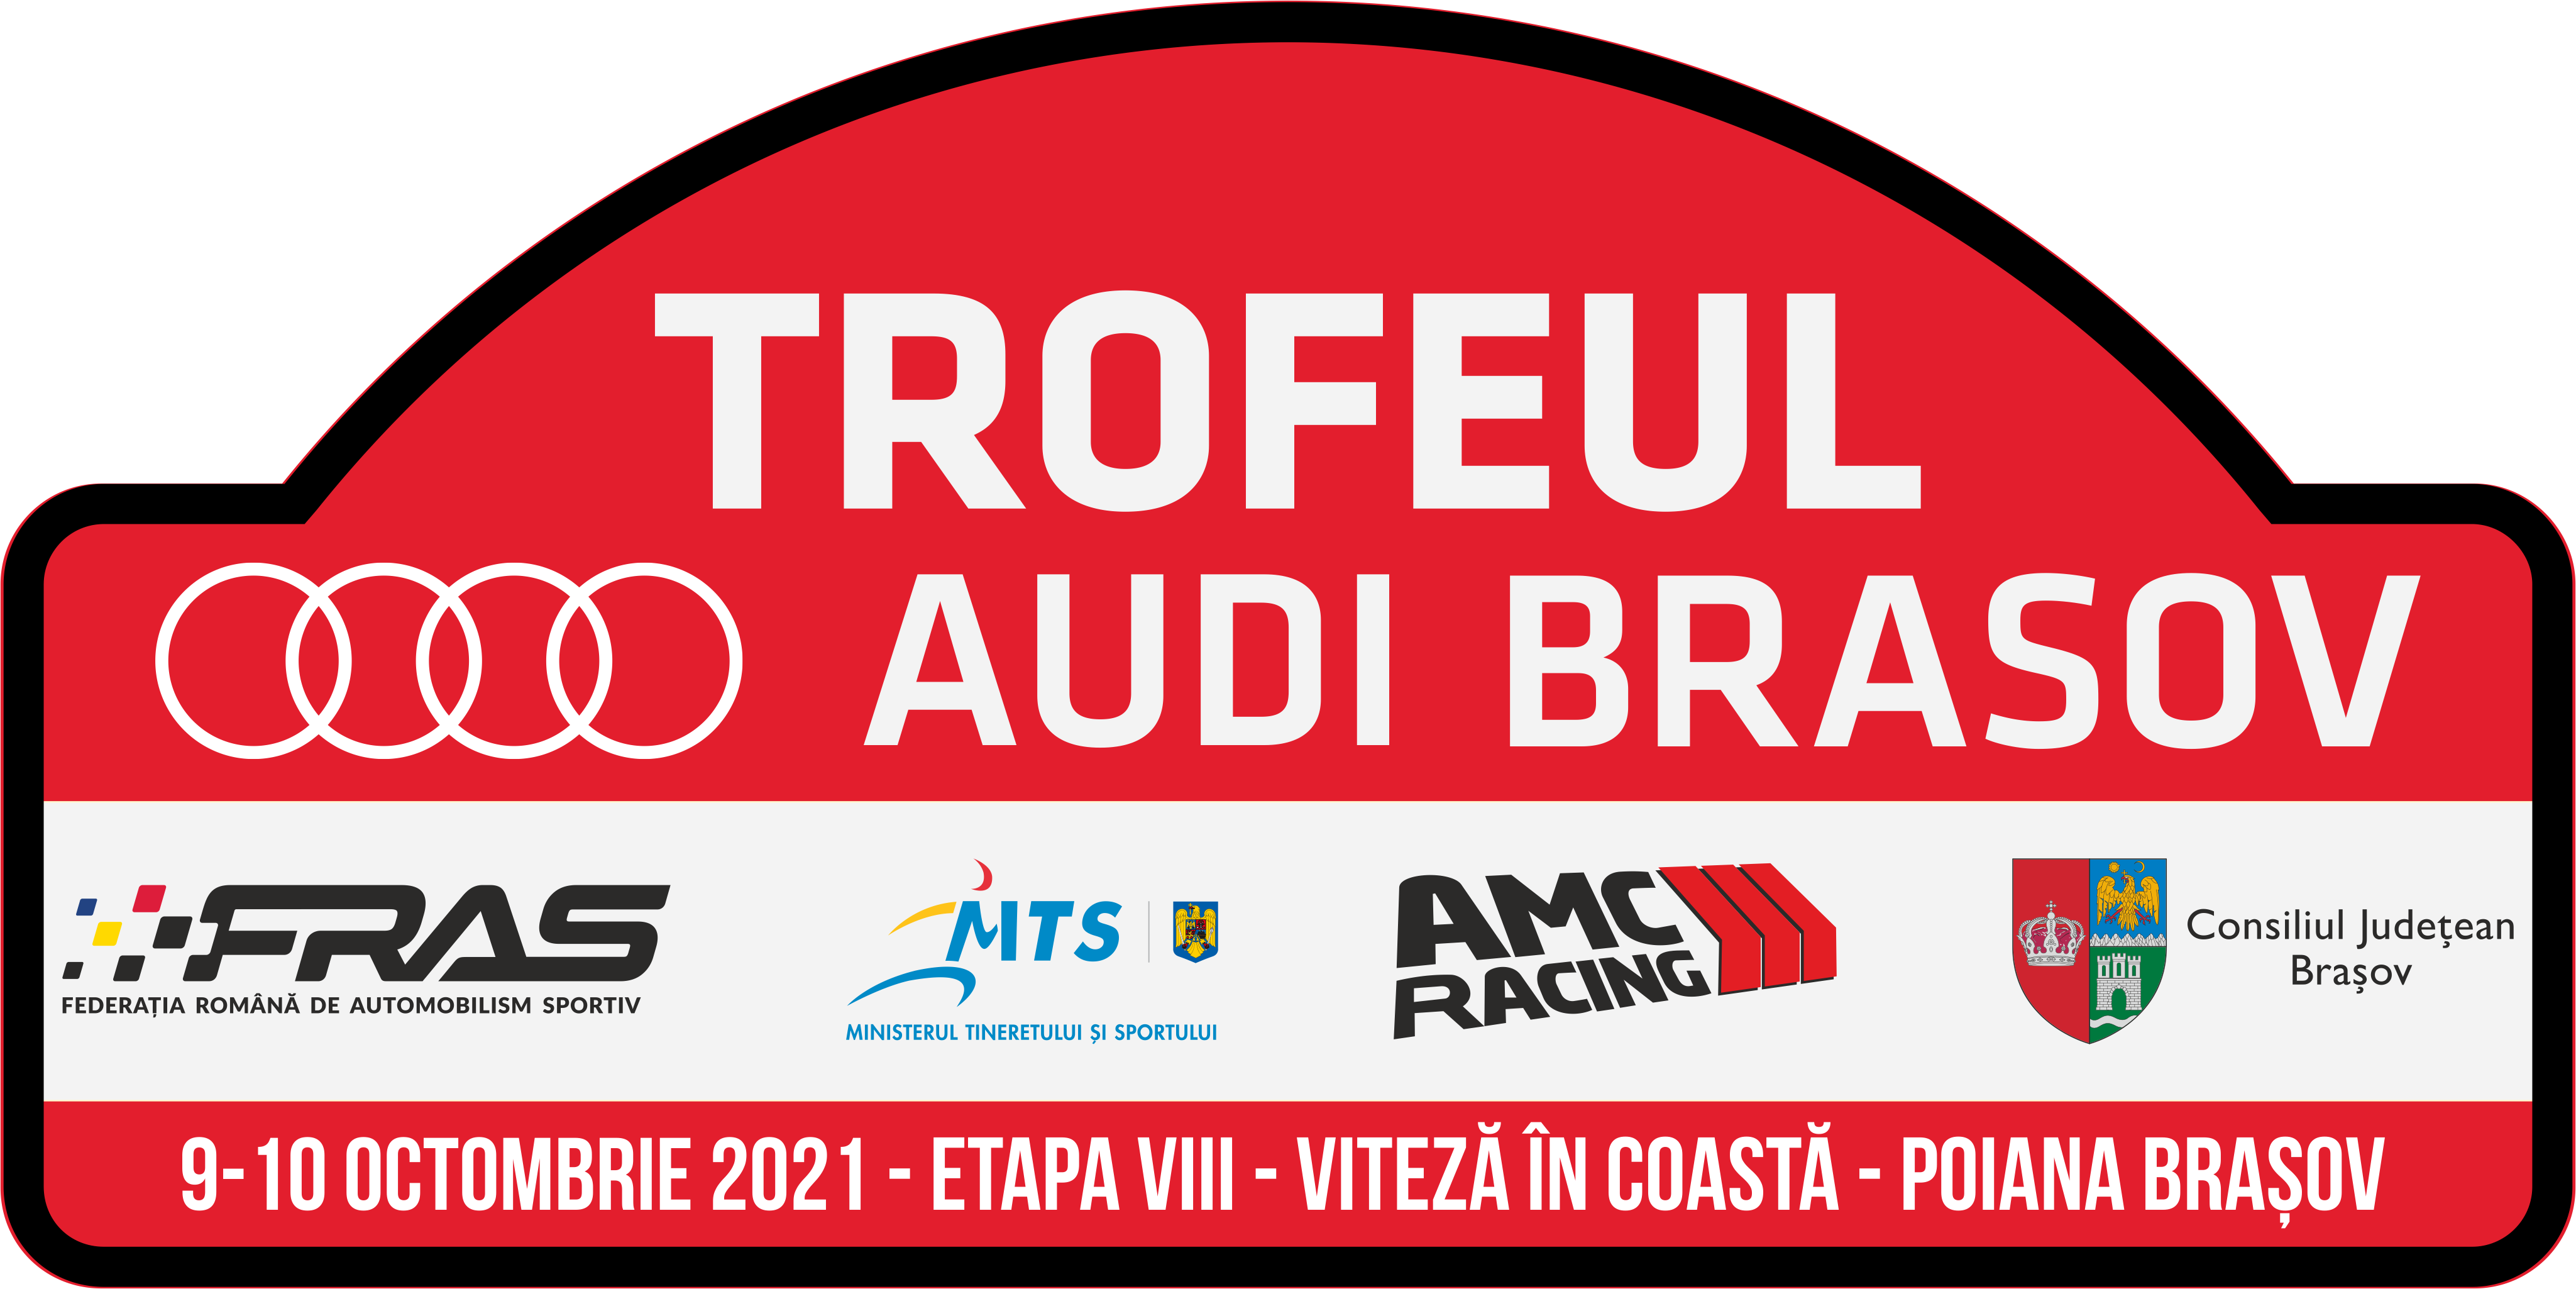 Trofeul Audi Brasov 2021